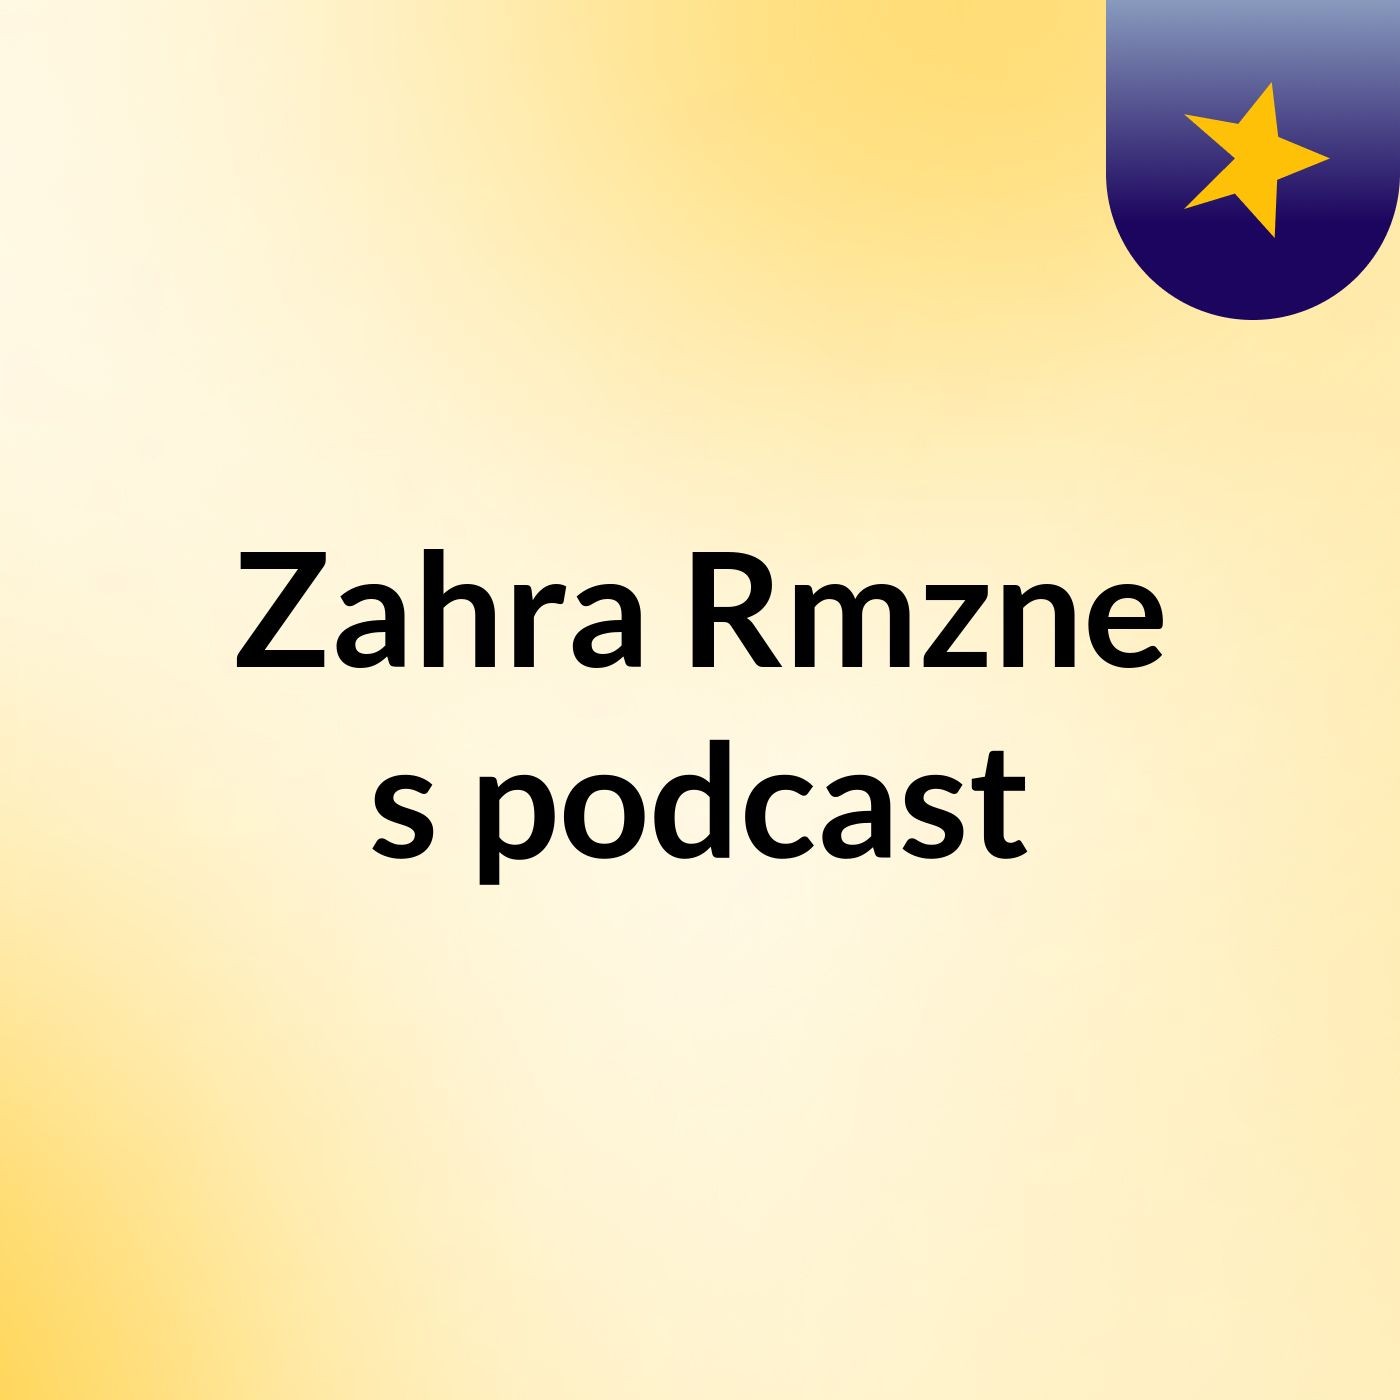 Zahra Rmzne's podcast